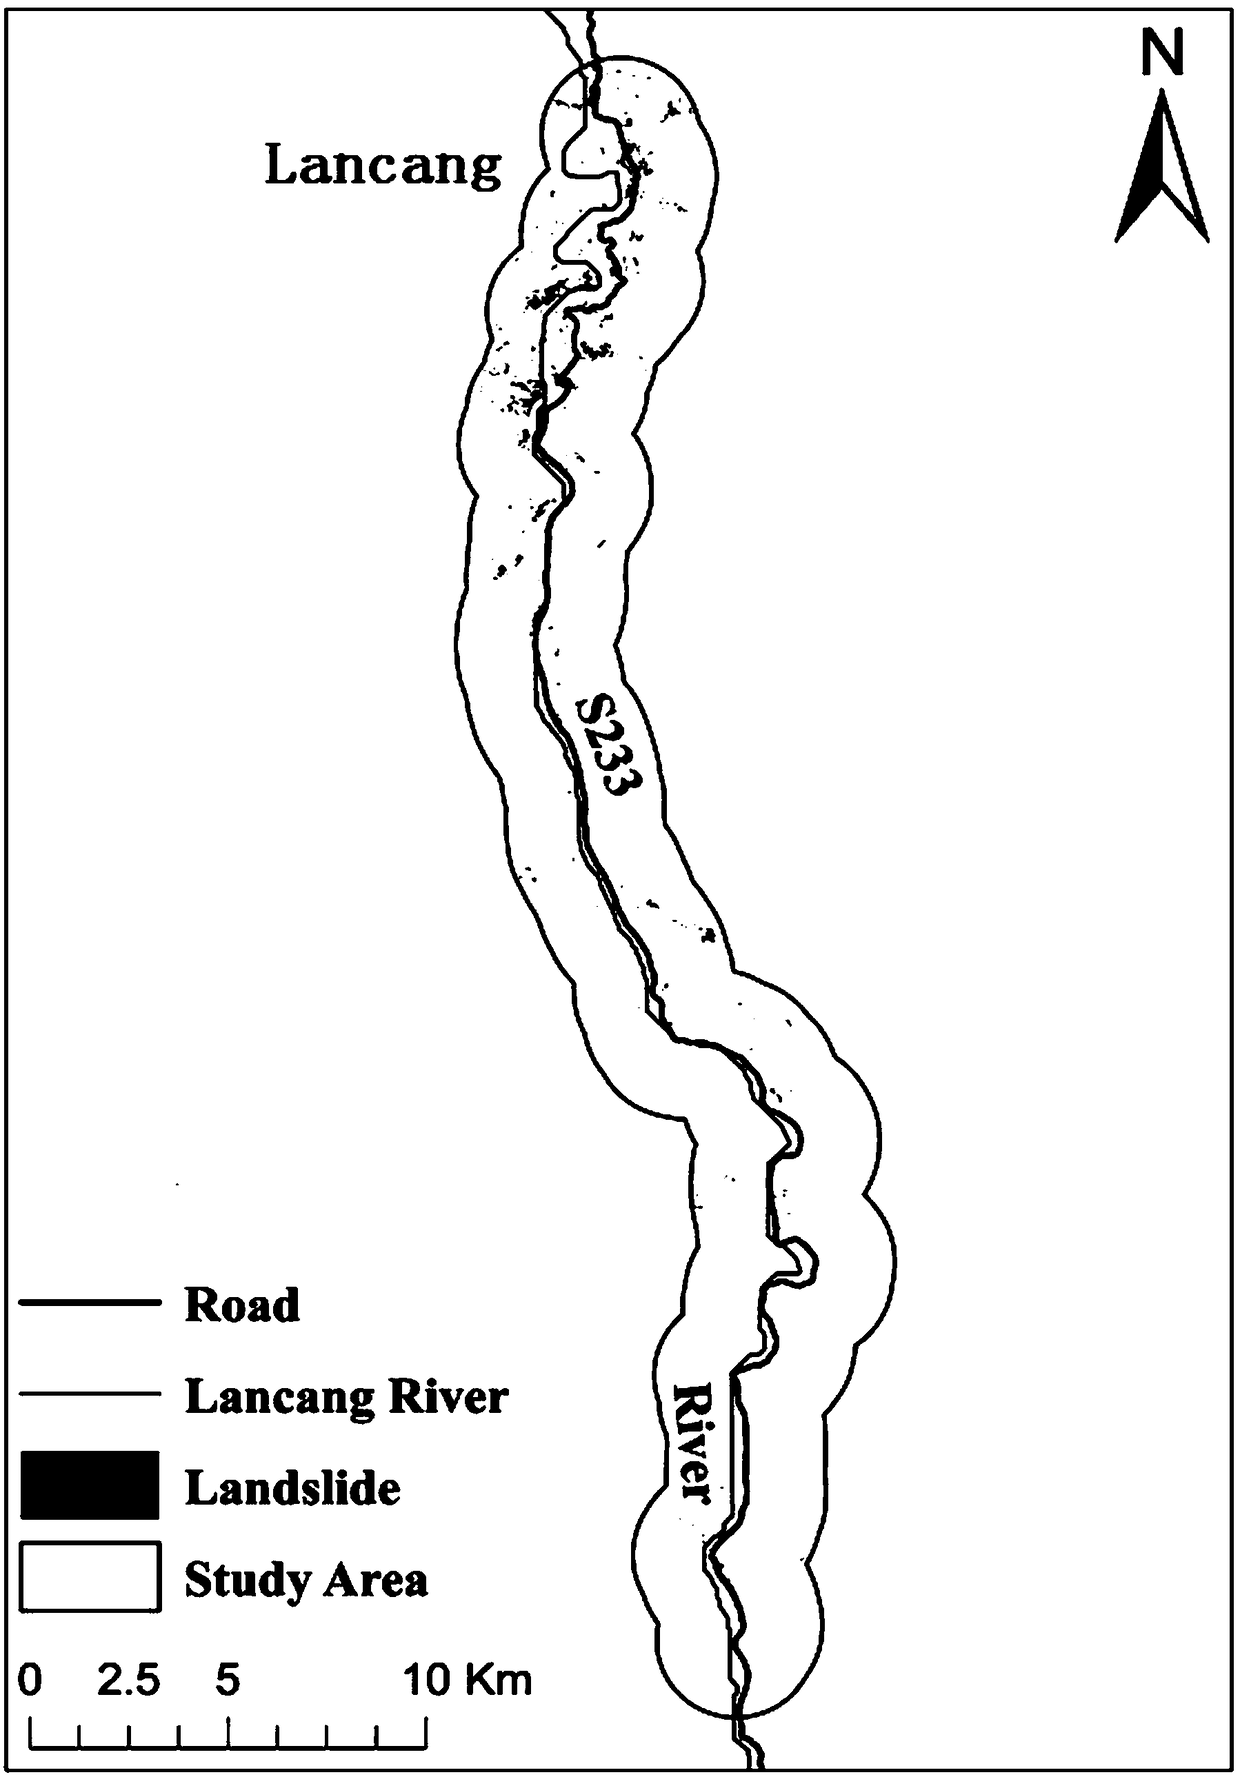 Fast extraction method of highway landslide area